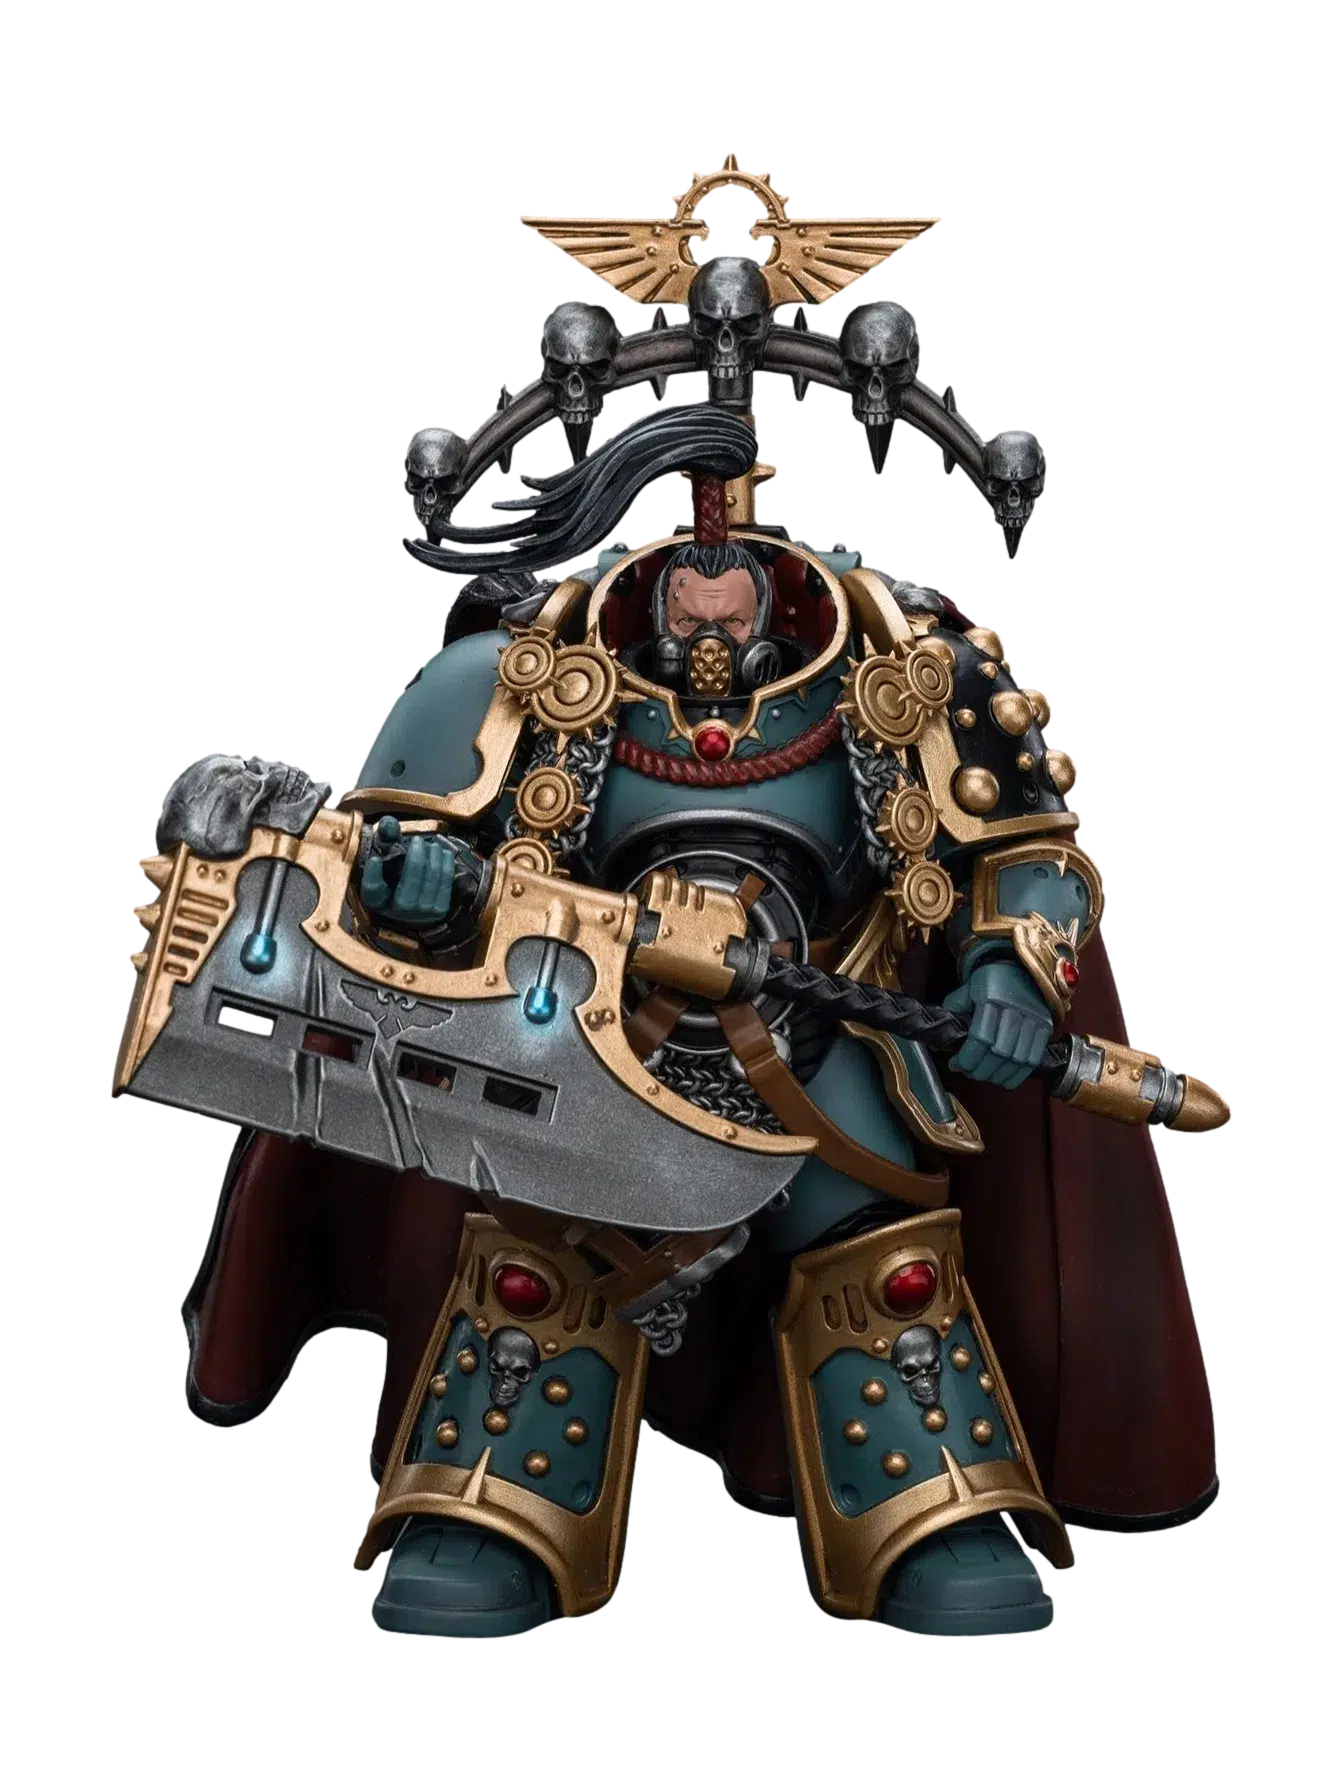 Warhammer: Horus Heresy: Sons Of Horus: Legion Praetor with Power Axe: Joy Toy